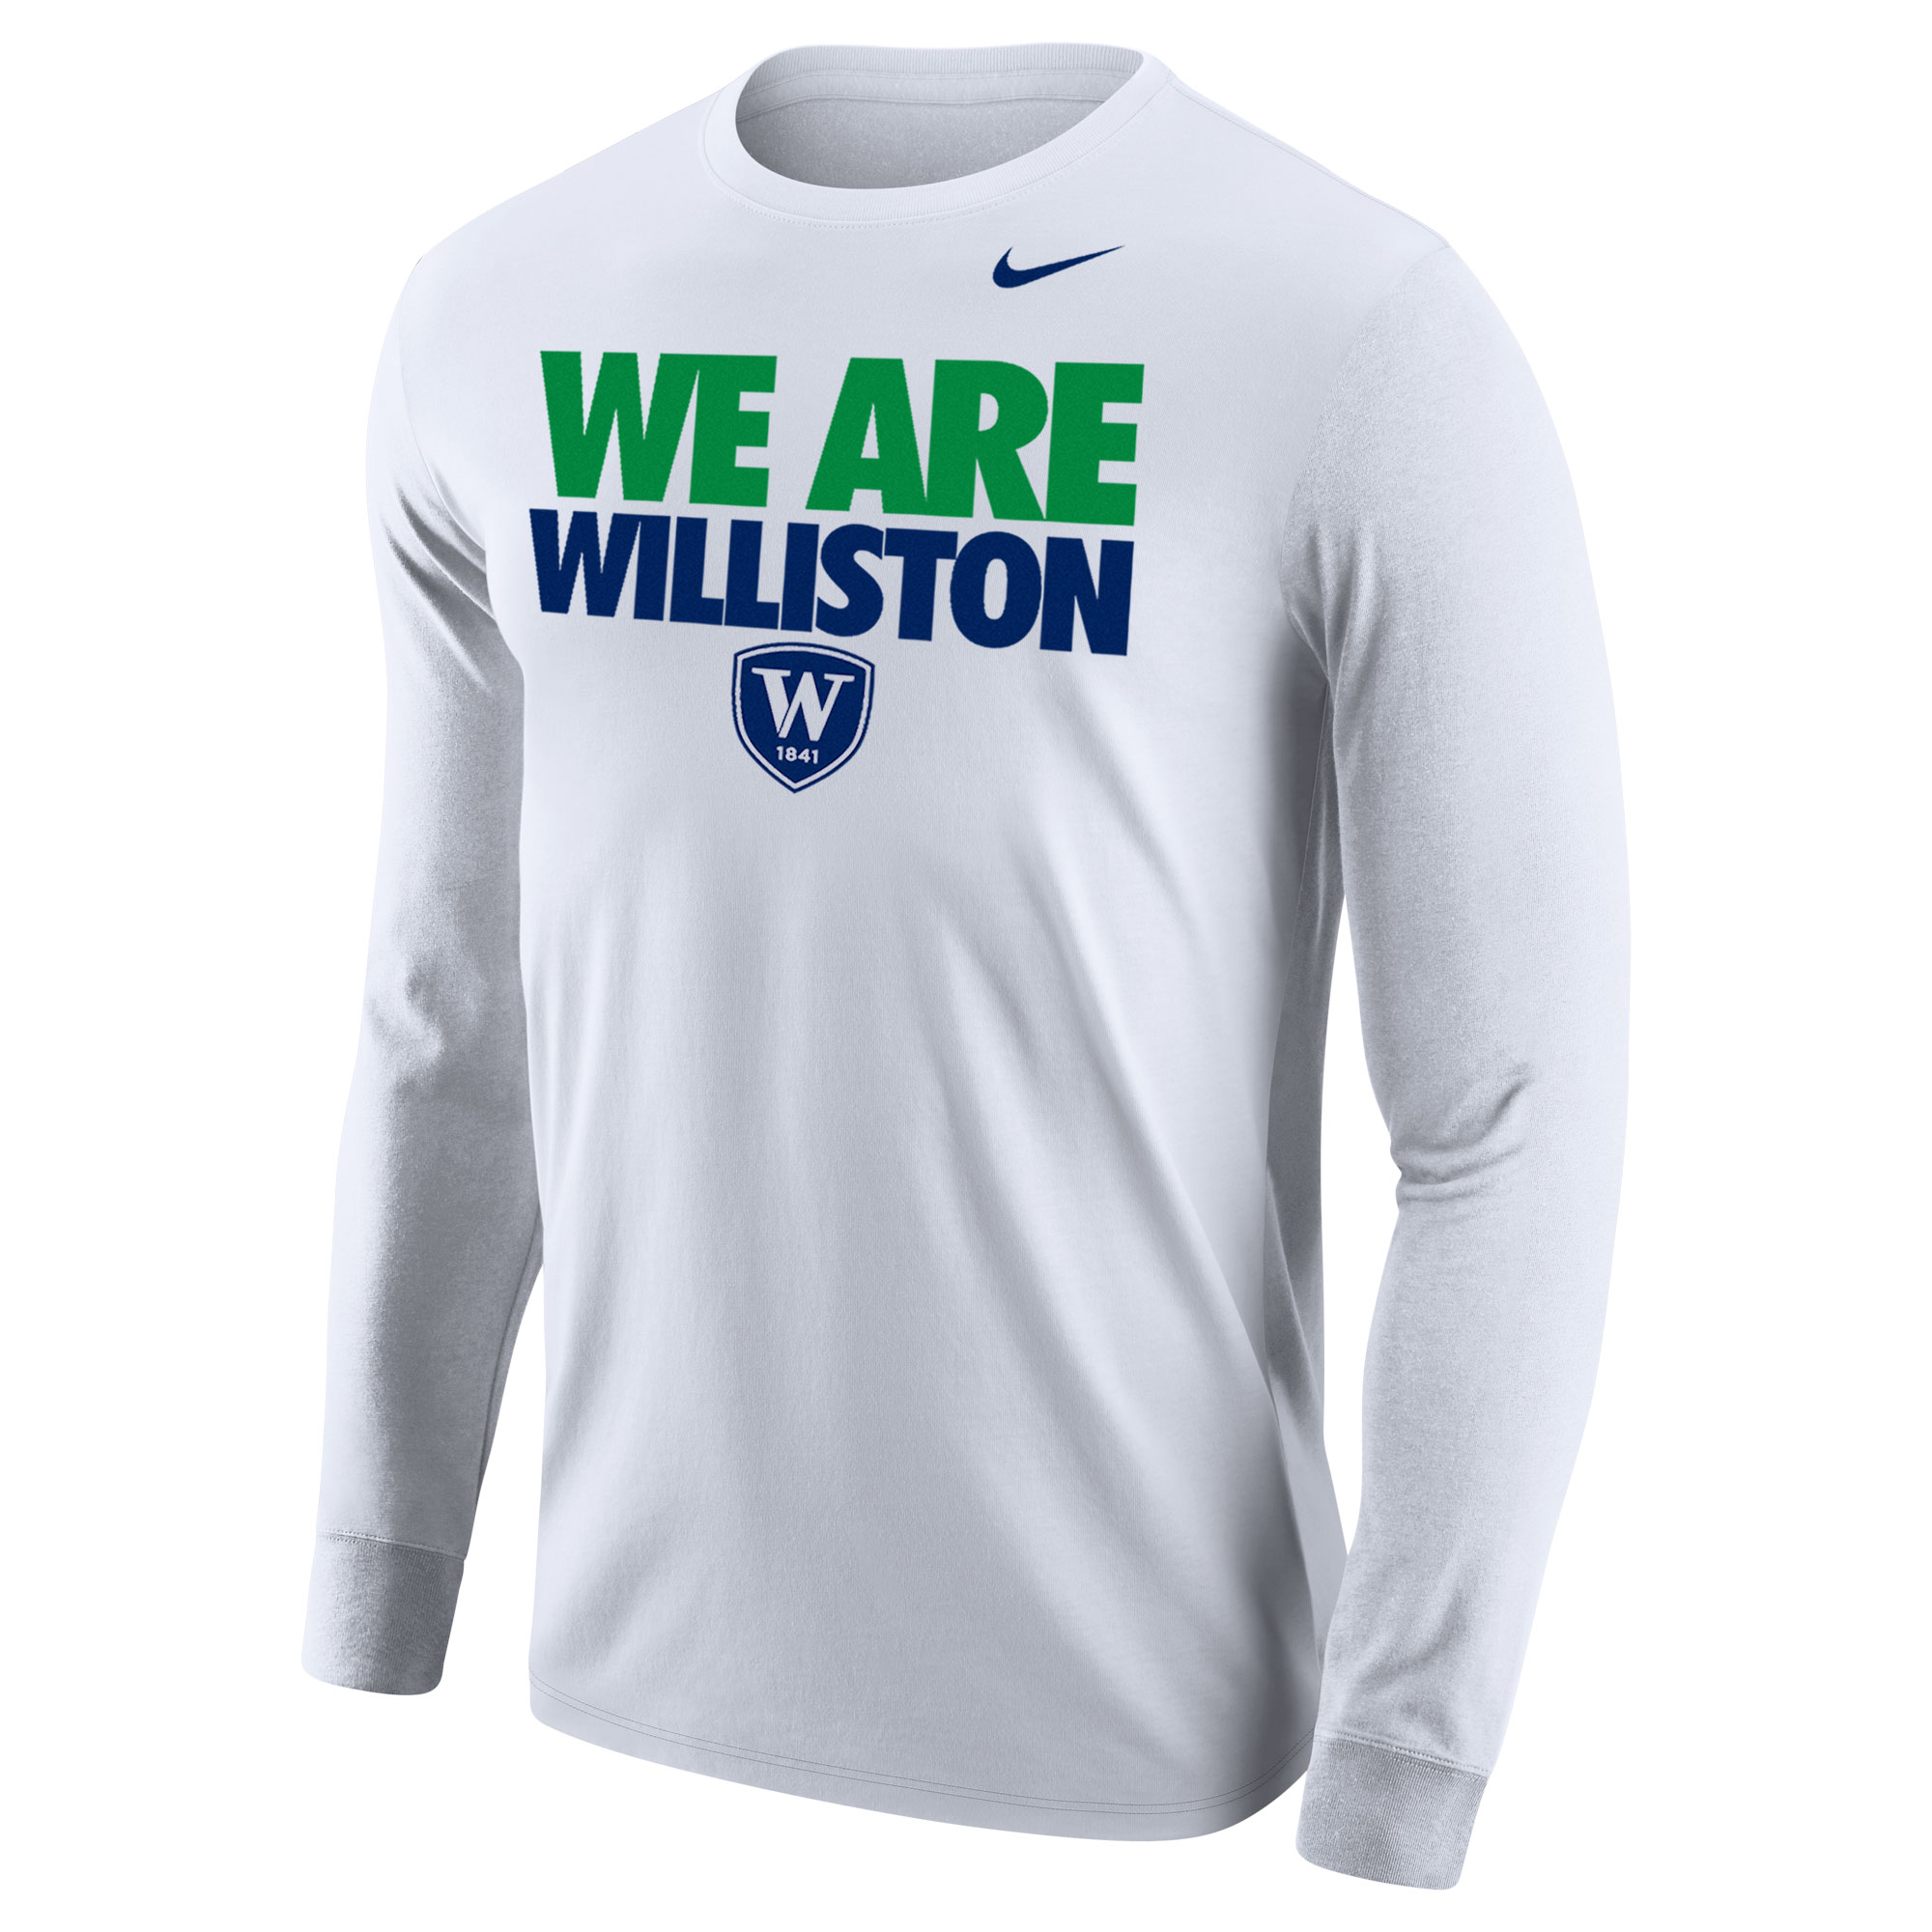 Nike We Are Williston T-Shirt 